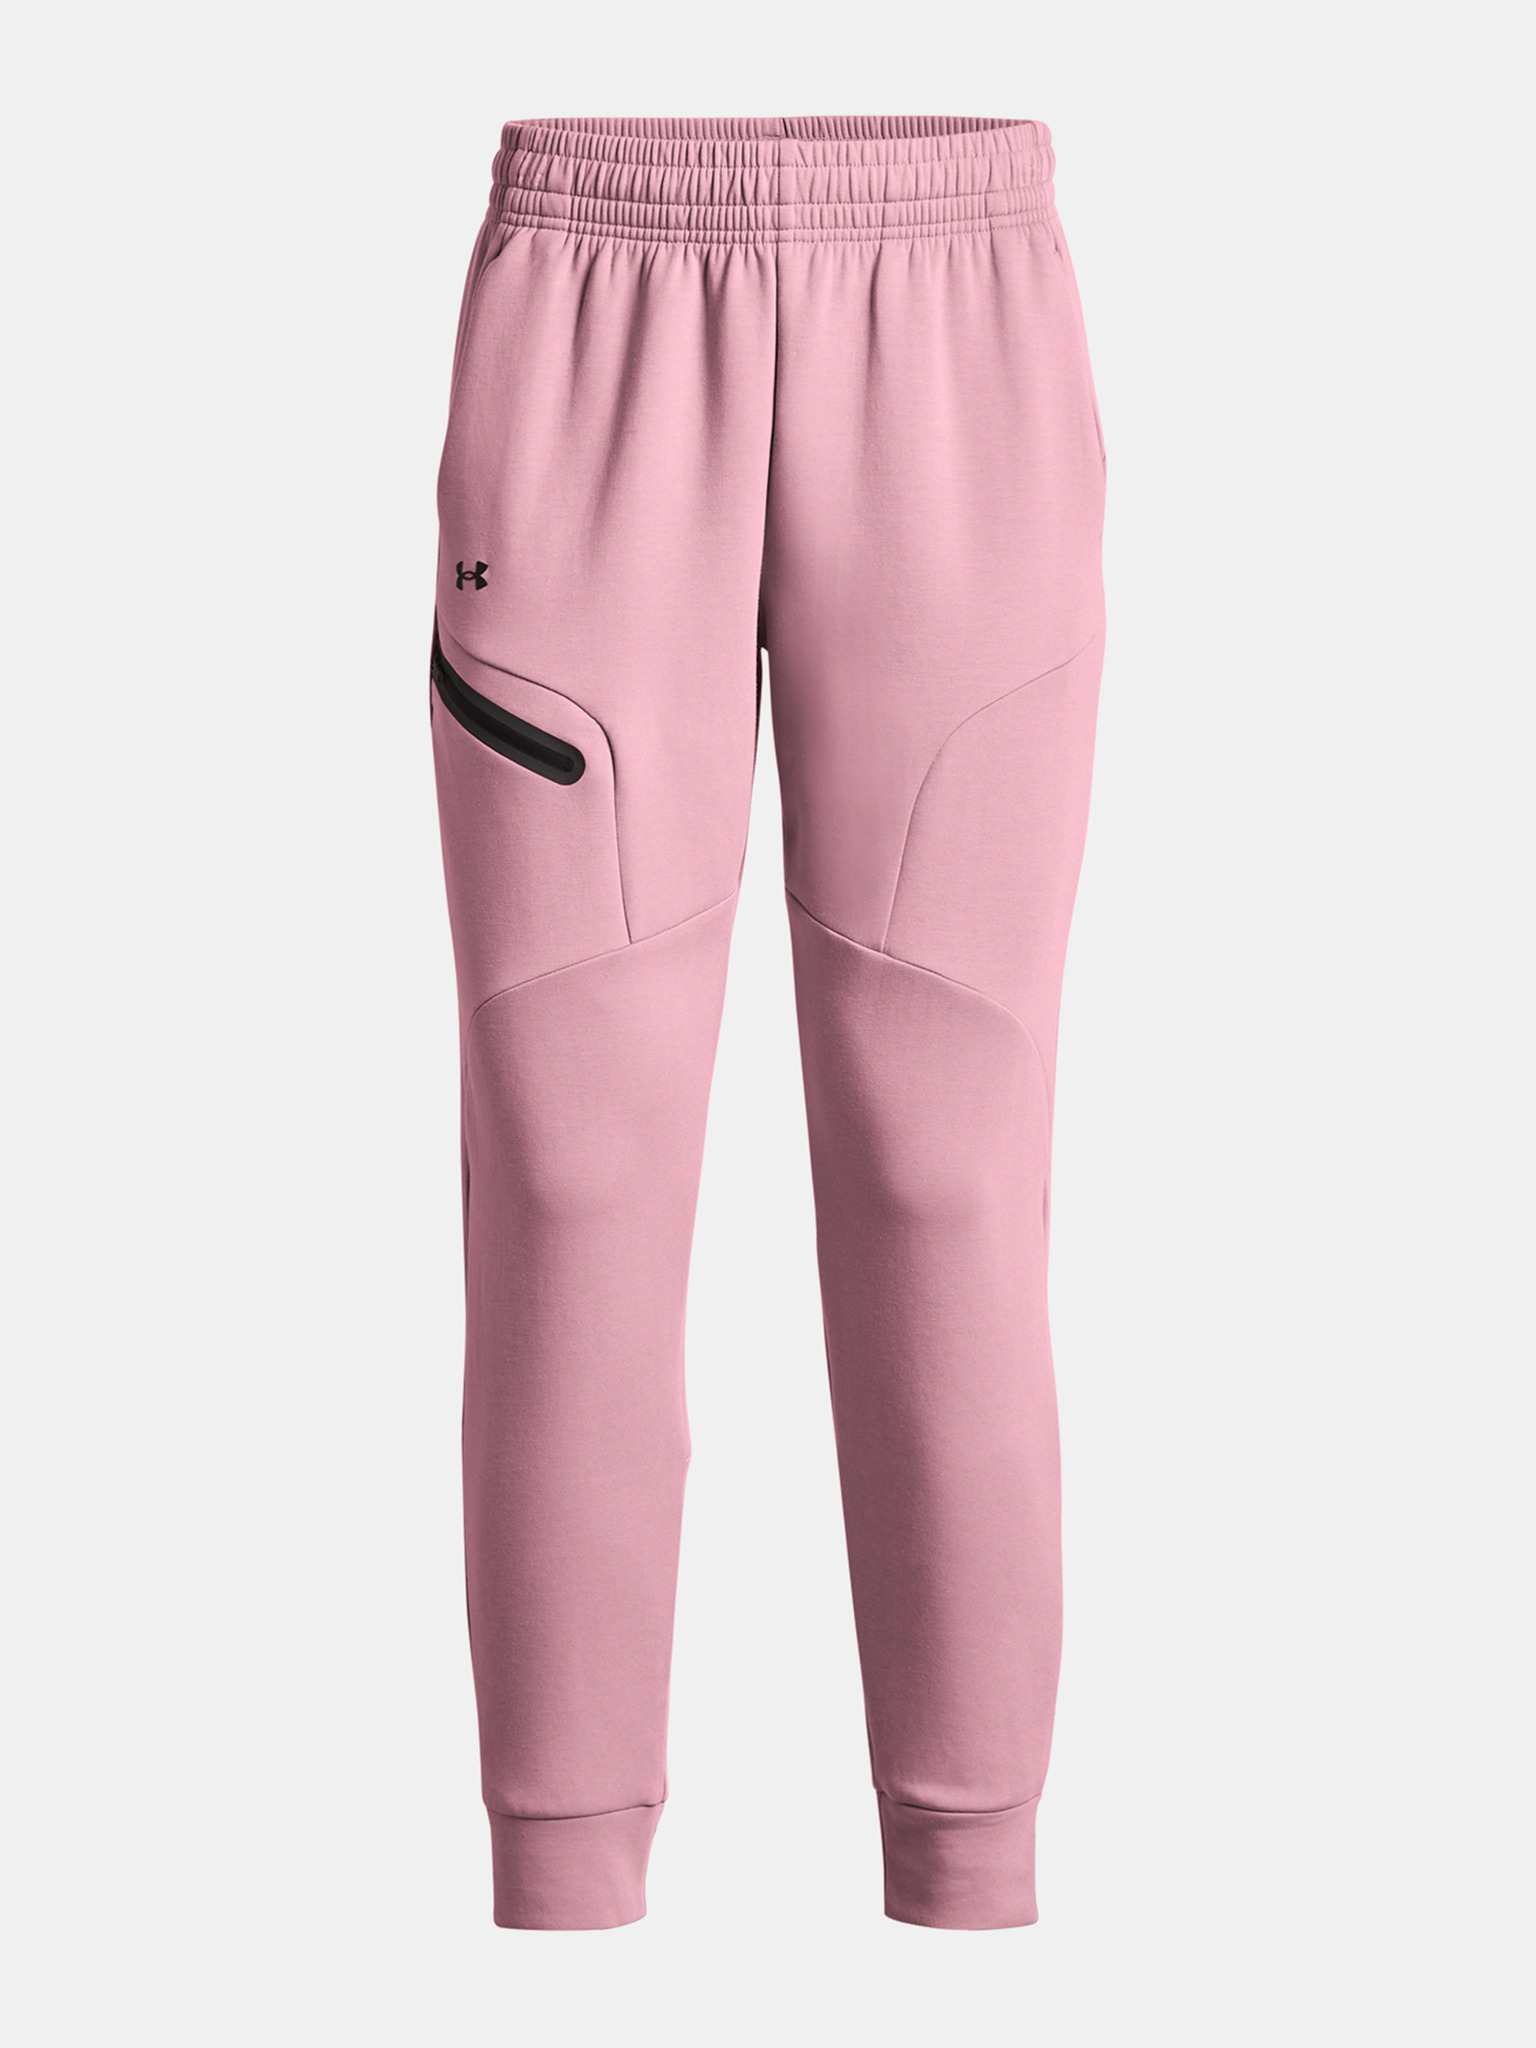 Nike leggings-xl - Depop